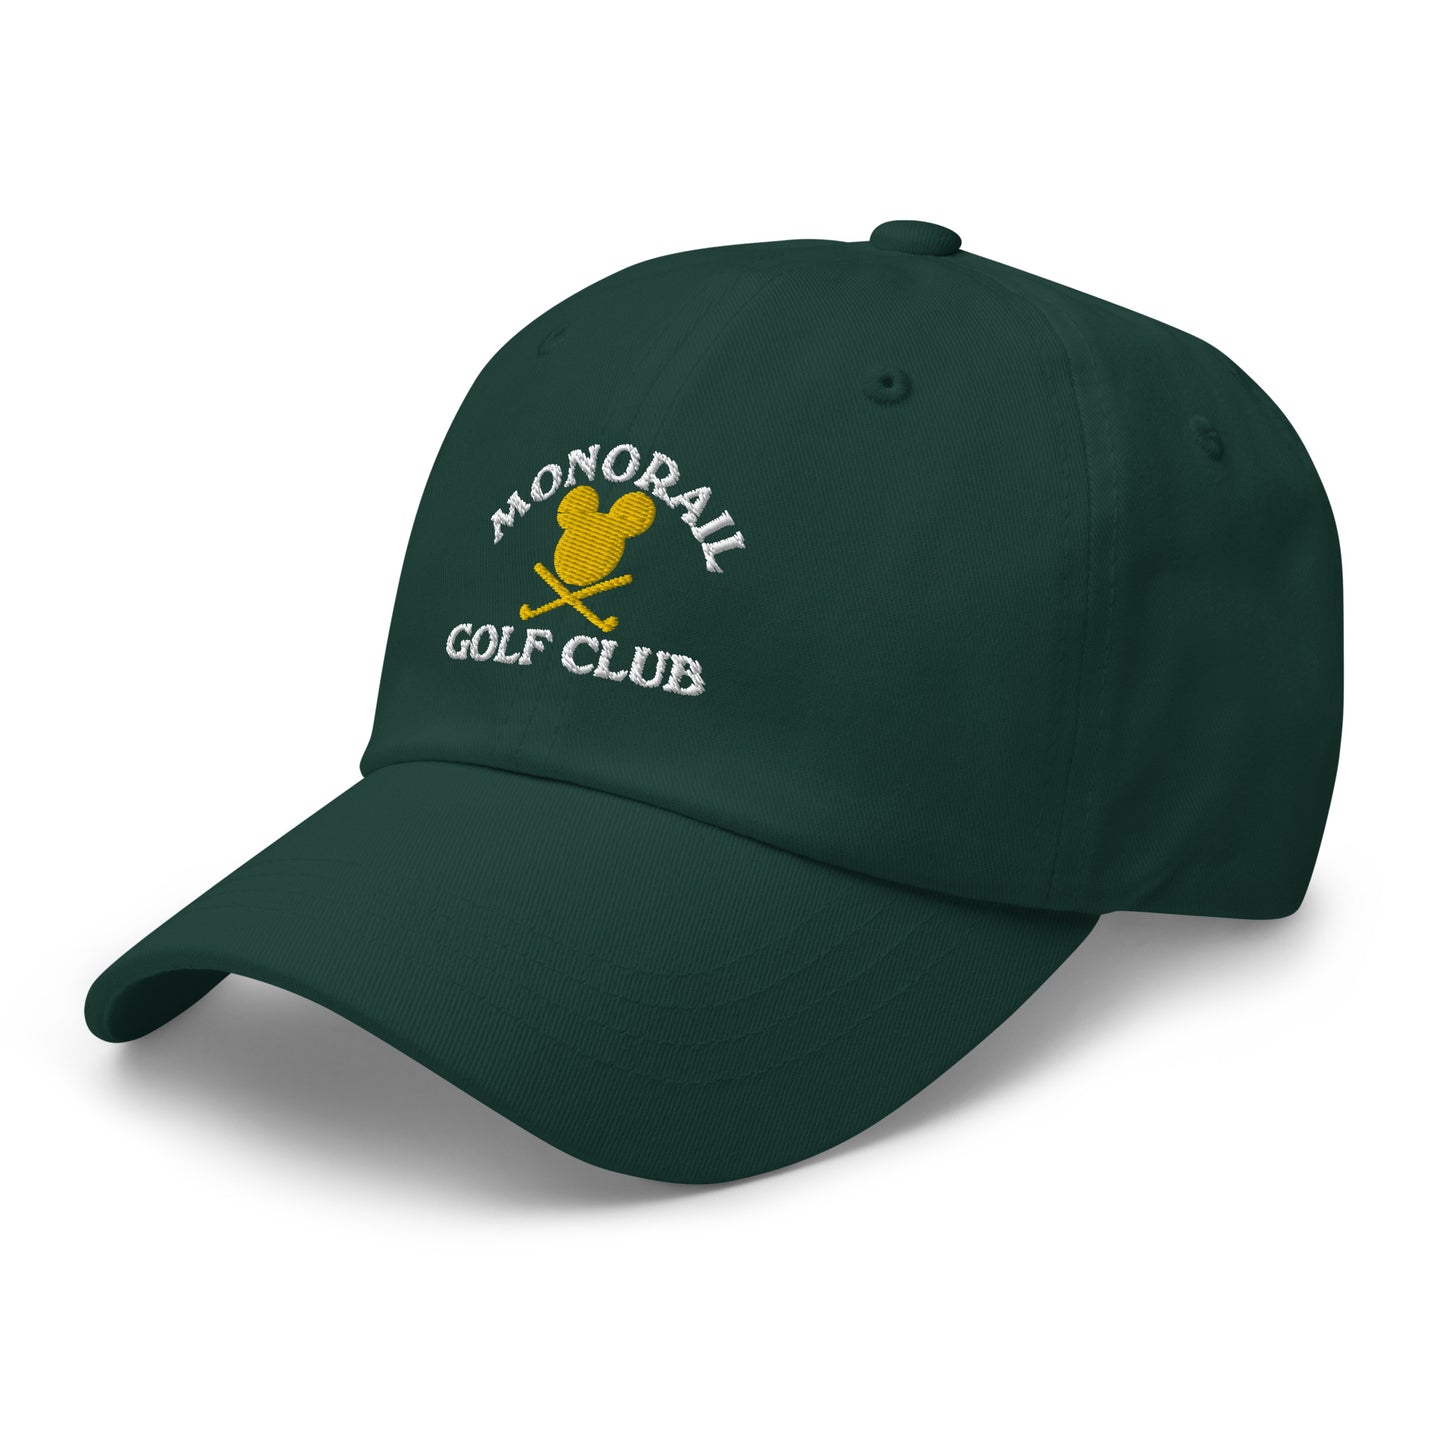 Monorail Golf Club Hat - Green/Gold